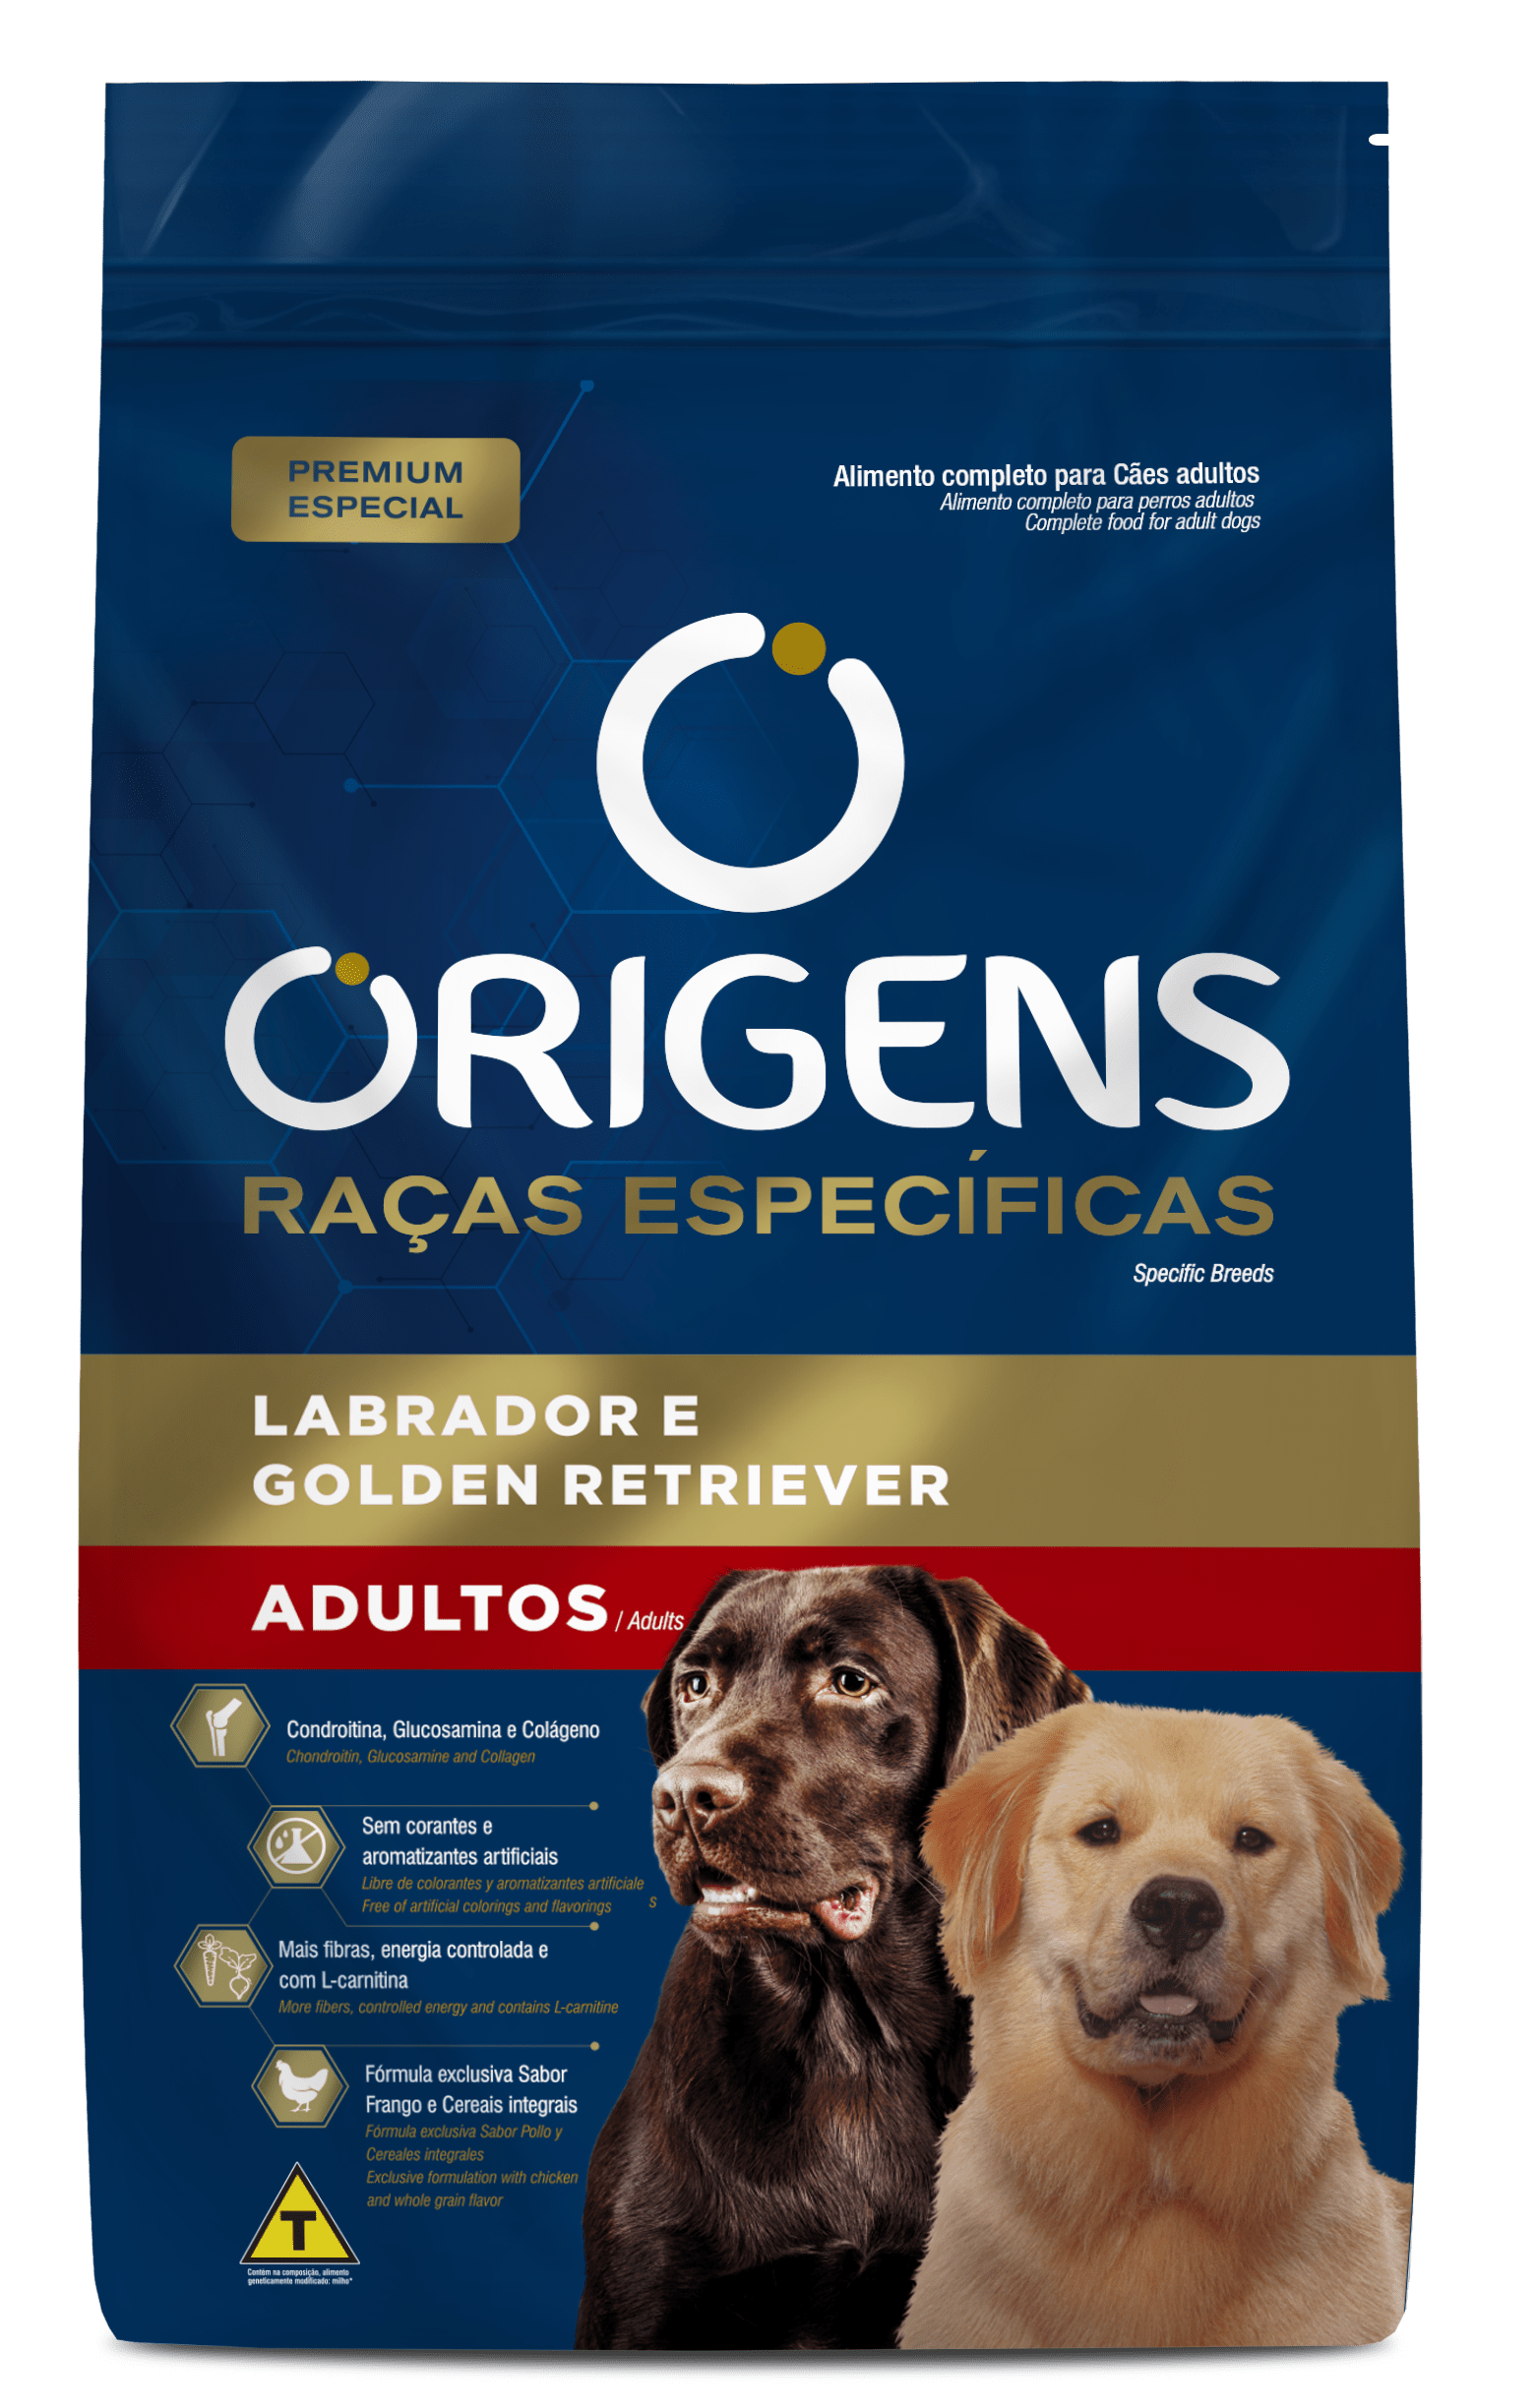 Origens Premium Especial Specific Breeds Adult Dogs Labrador and Golden Retriever